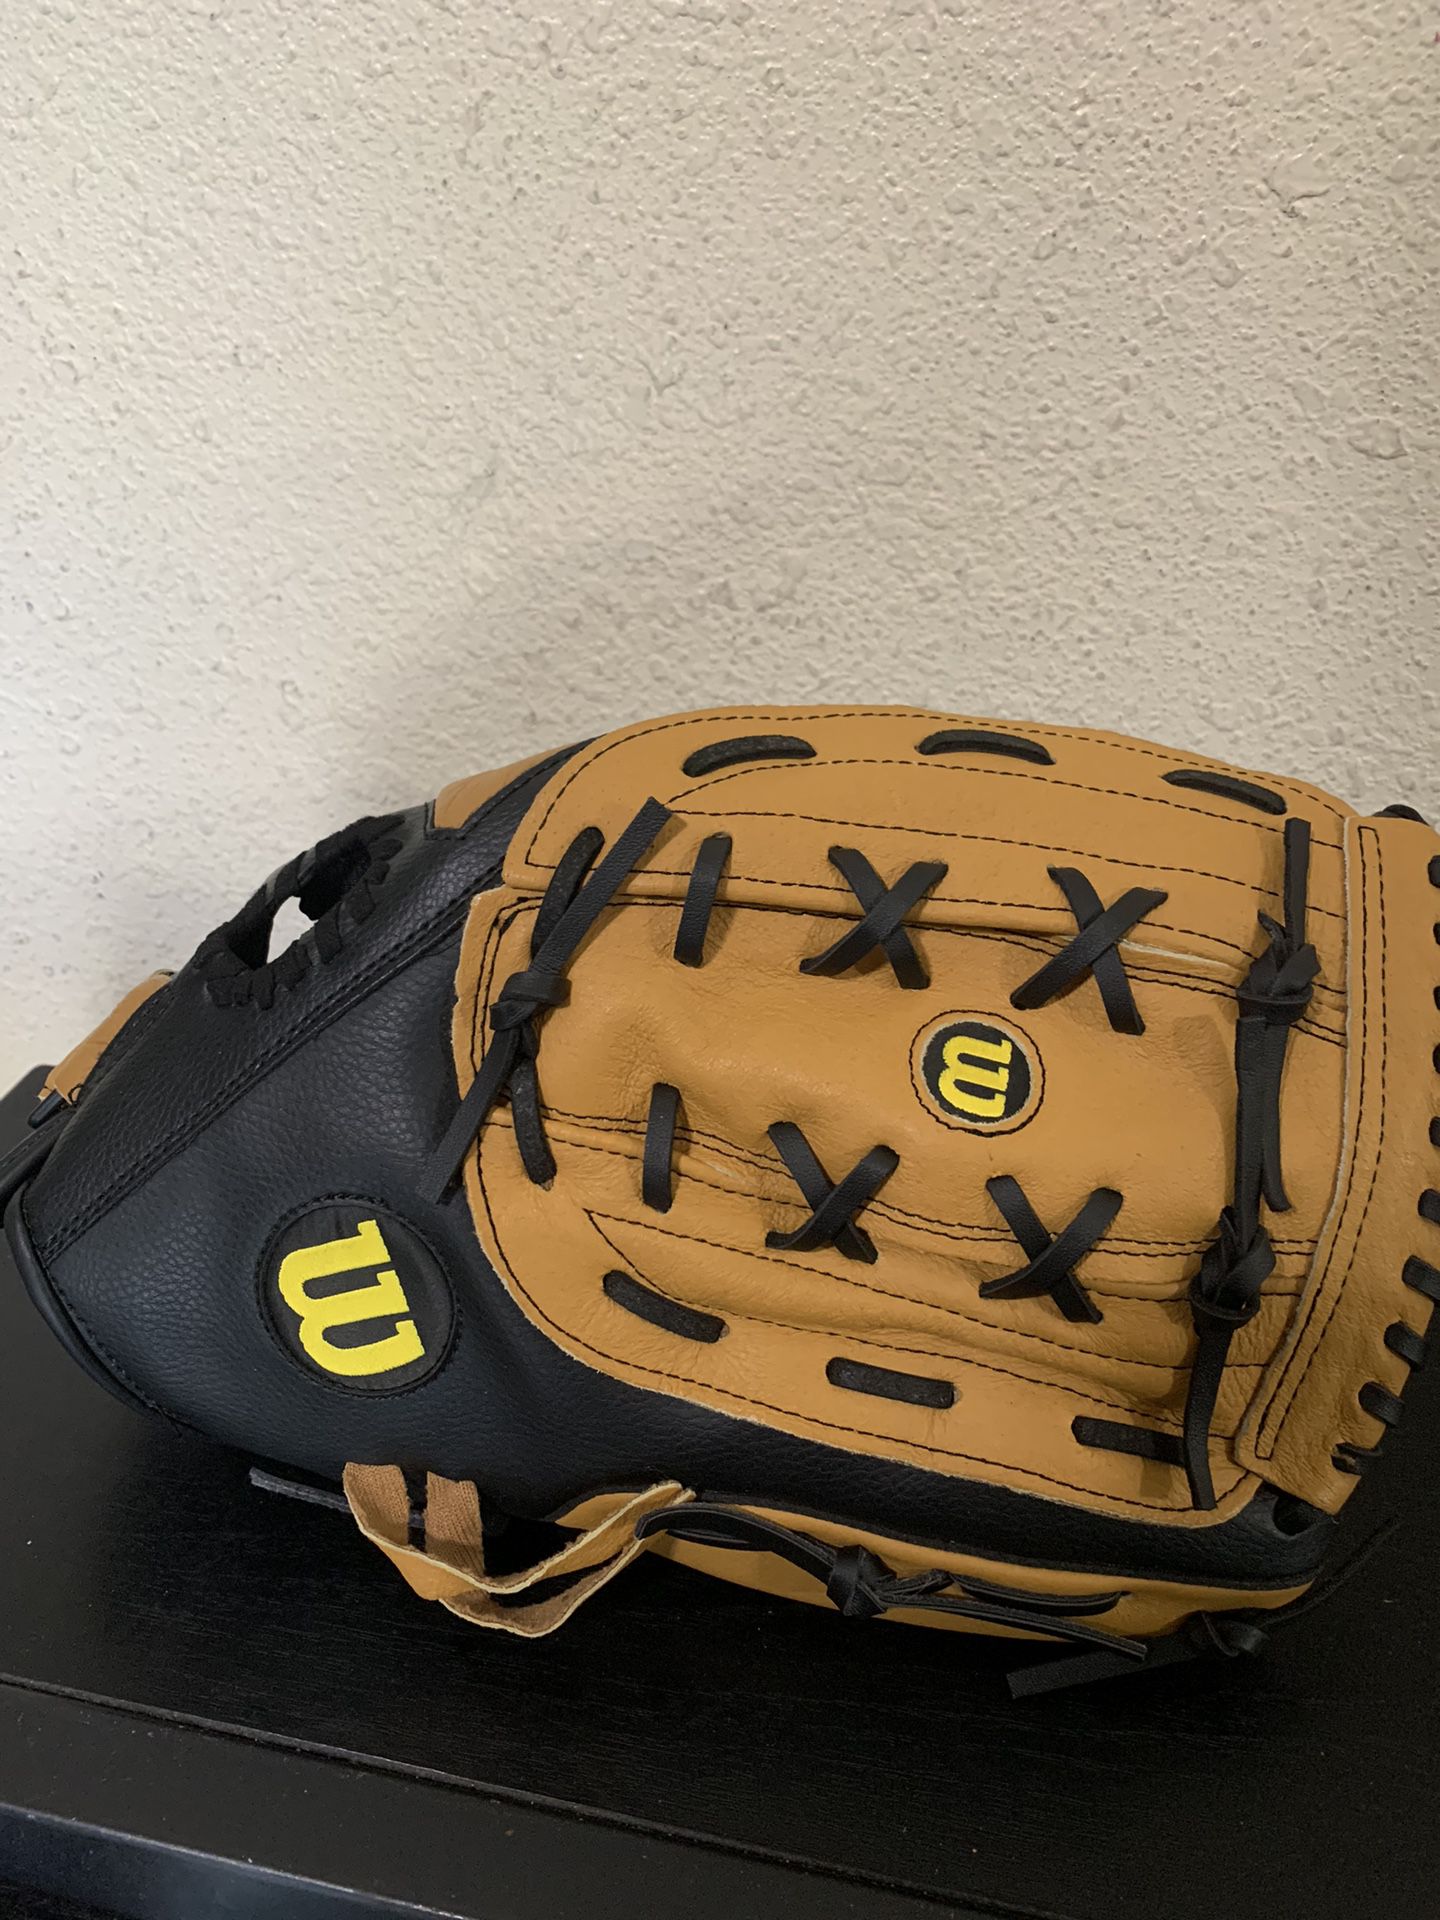 14” softball glove 